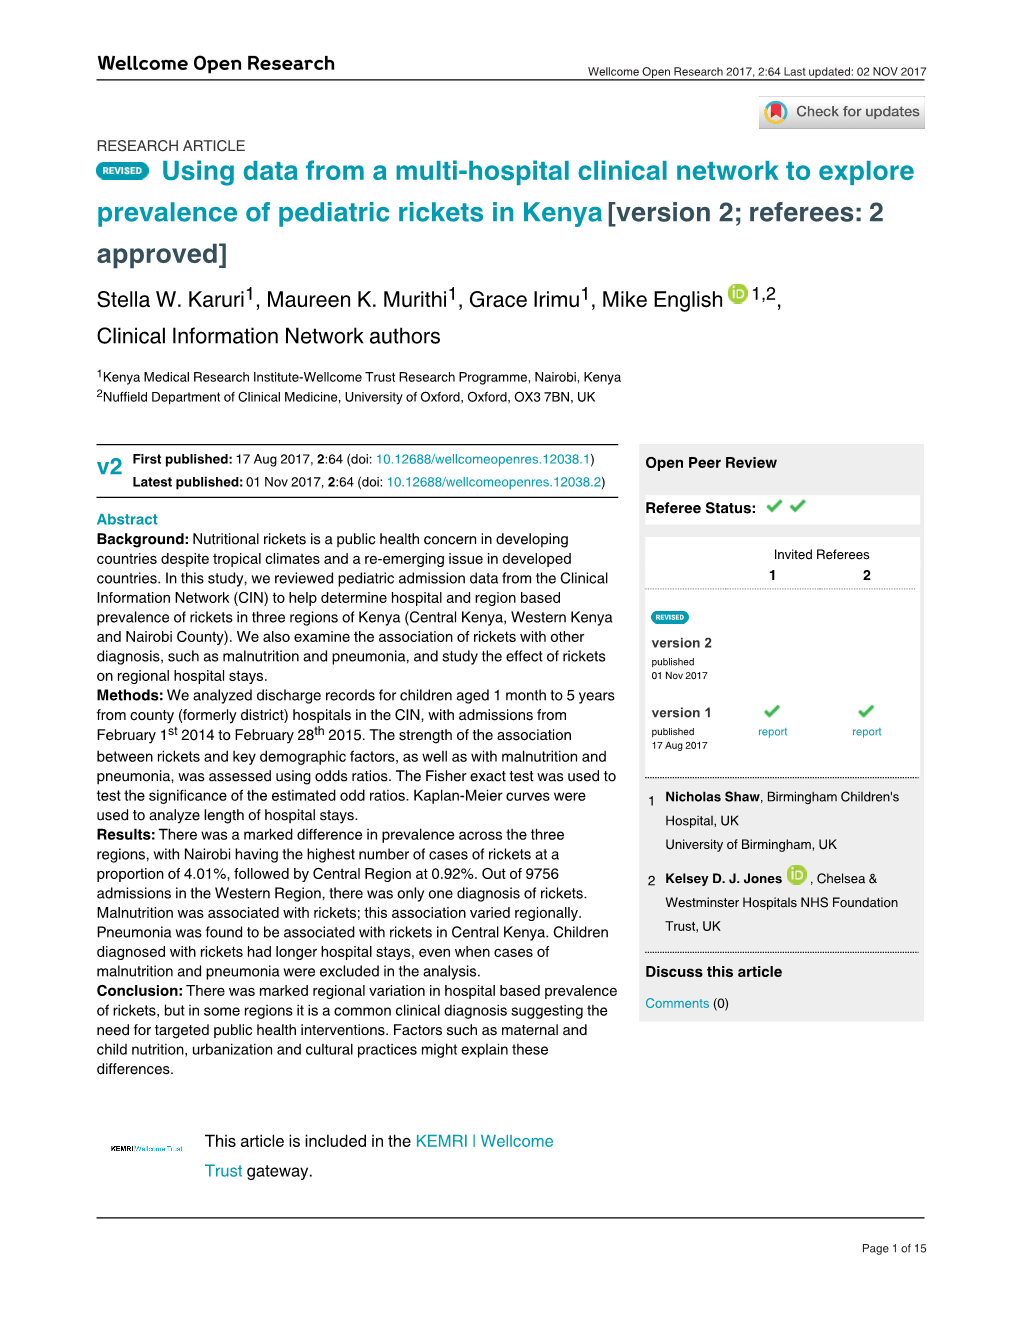 Prevalence of Pediatric Rickets in Kenya[Version 2; Referees: 2